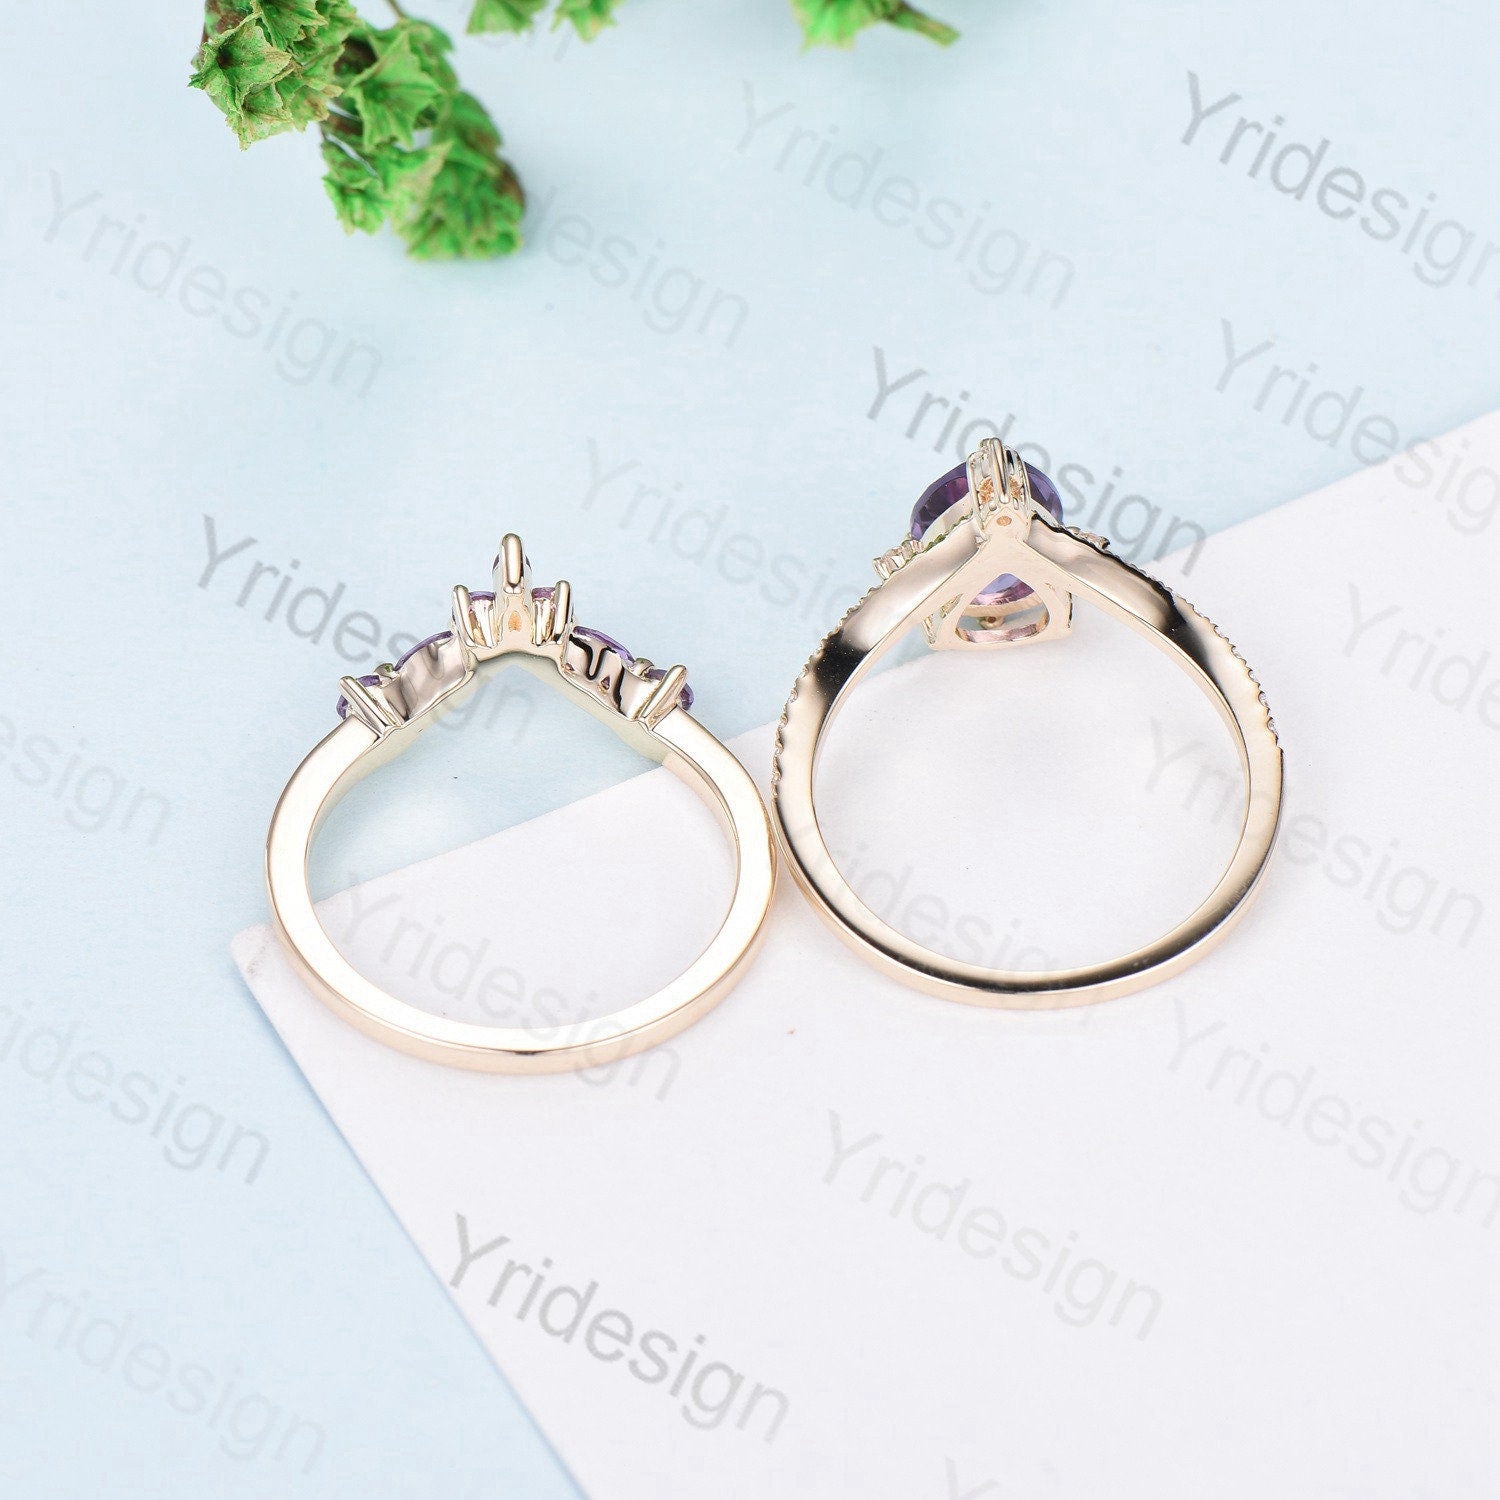 Vintage Pear Amethyst Engagement Ring 14K Yellow Gold Purple Crystal February Birthstone Wedding Ring Set For Women art deco bridal ring set - PENFINE